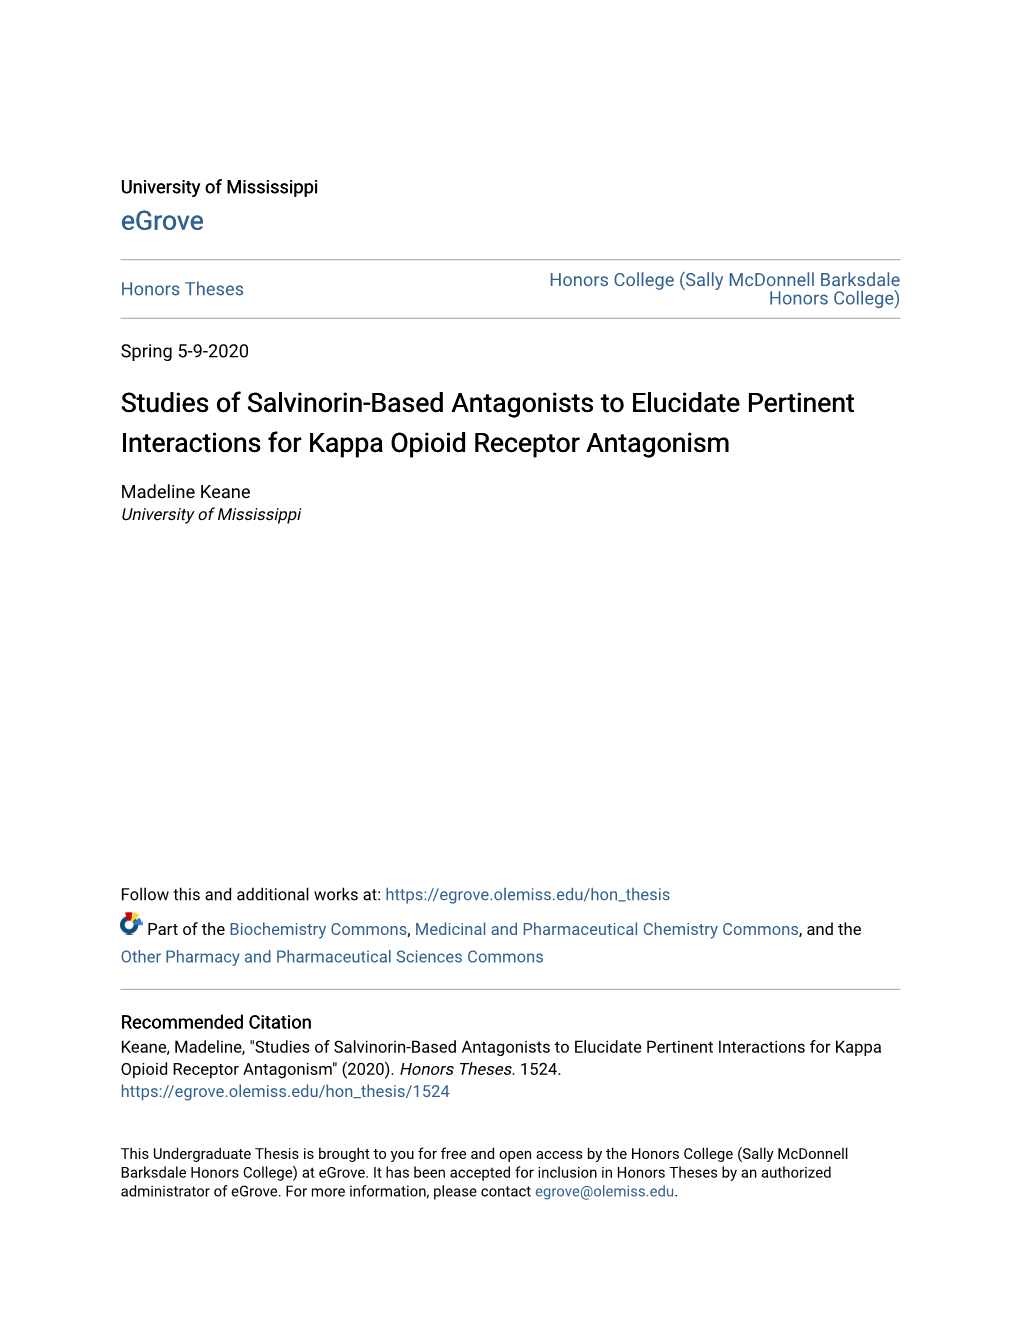 Studies of Salvinorin-Based Antagonists to Elucidate Pertinent Interactions for Kappa Opioid Receptor Antagonism